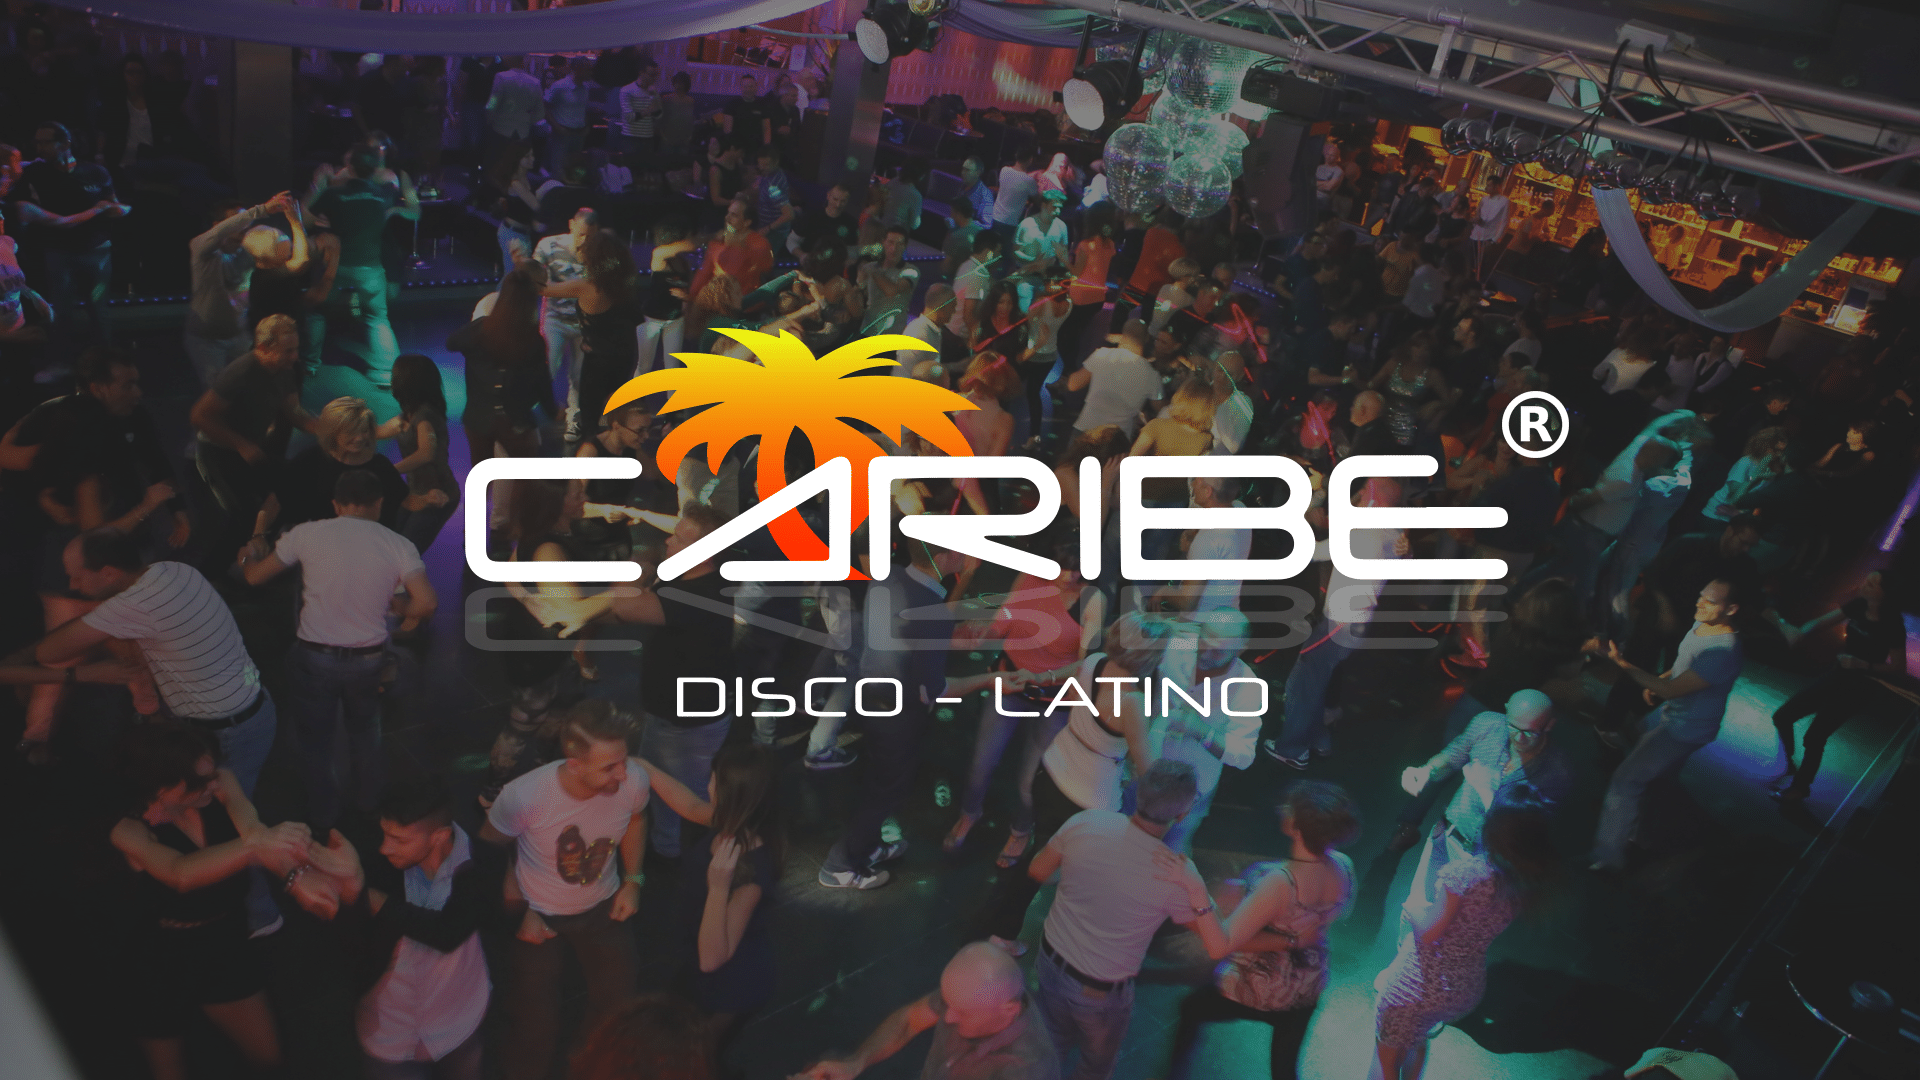 Discoteca Caribe